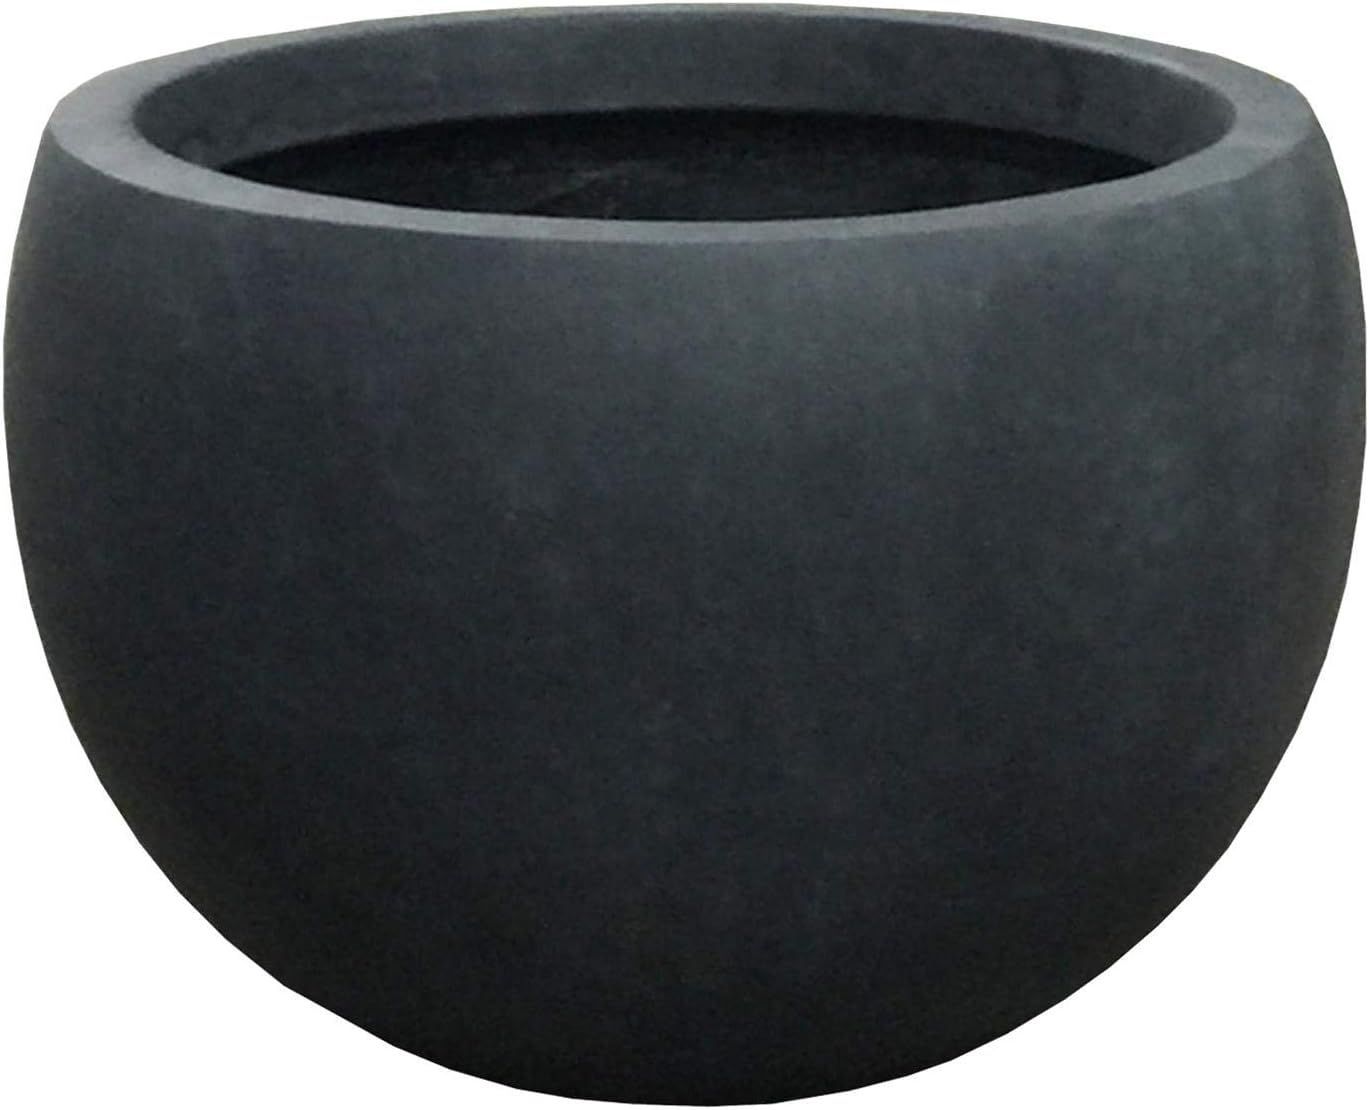 20" W Round Charcoal Concrete/Fiberglass Indoor Outdoor Elegant Bowl Planter | Amazon (US)